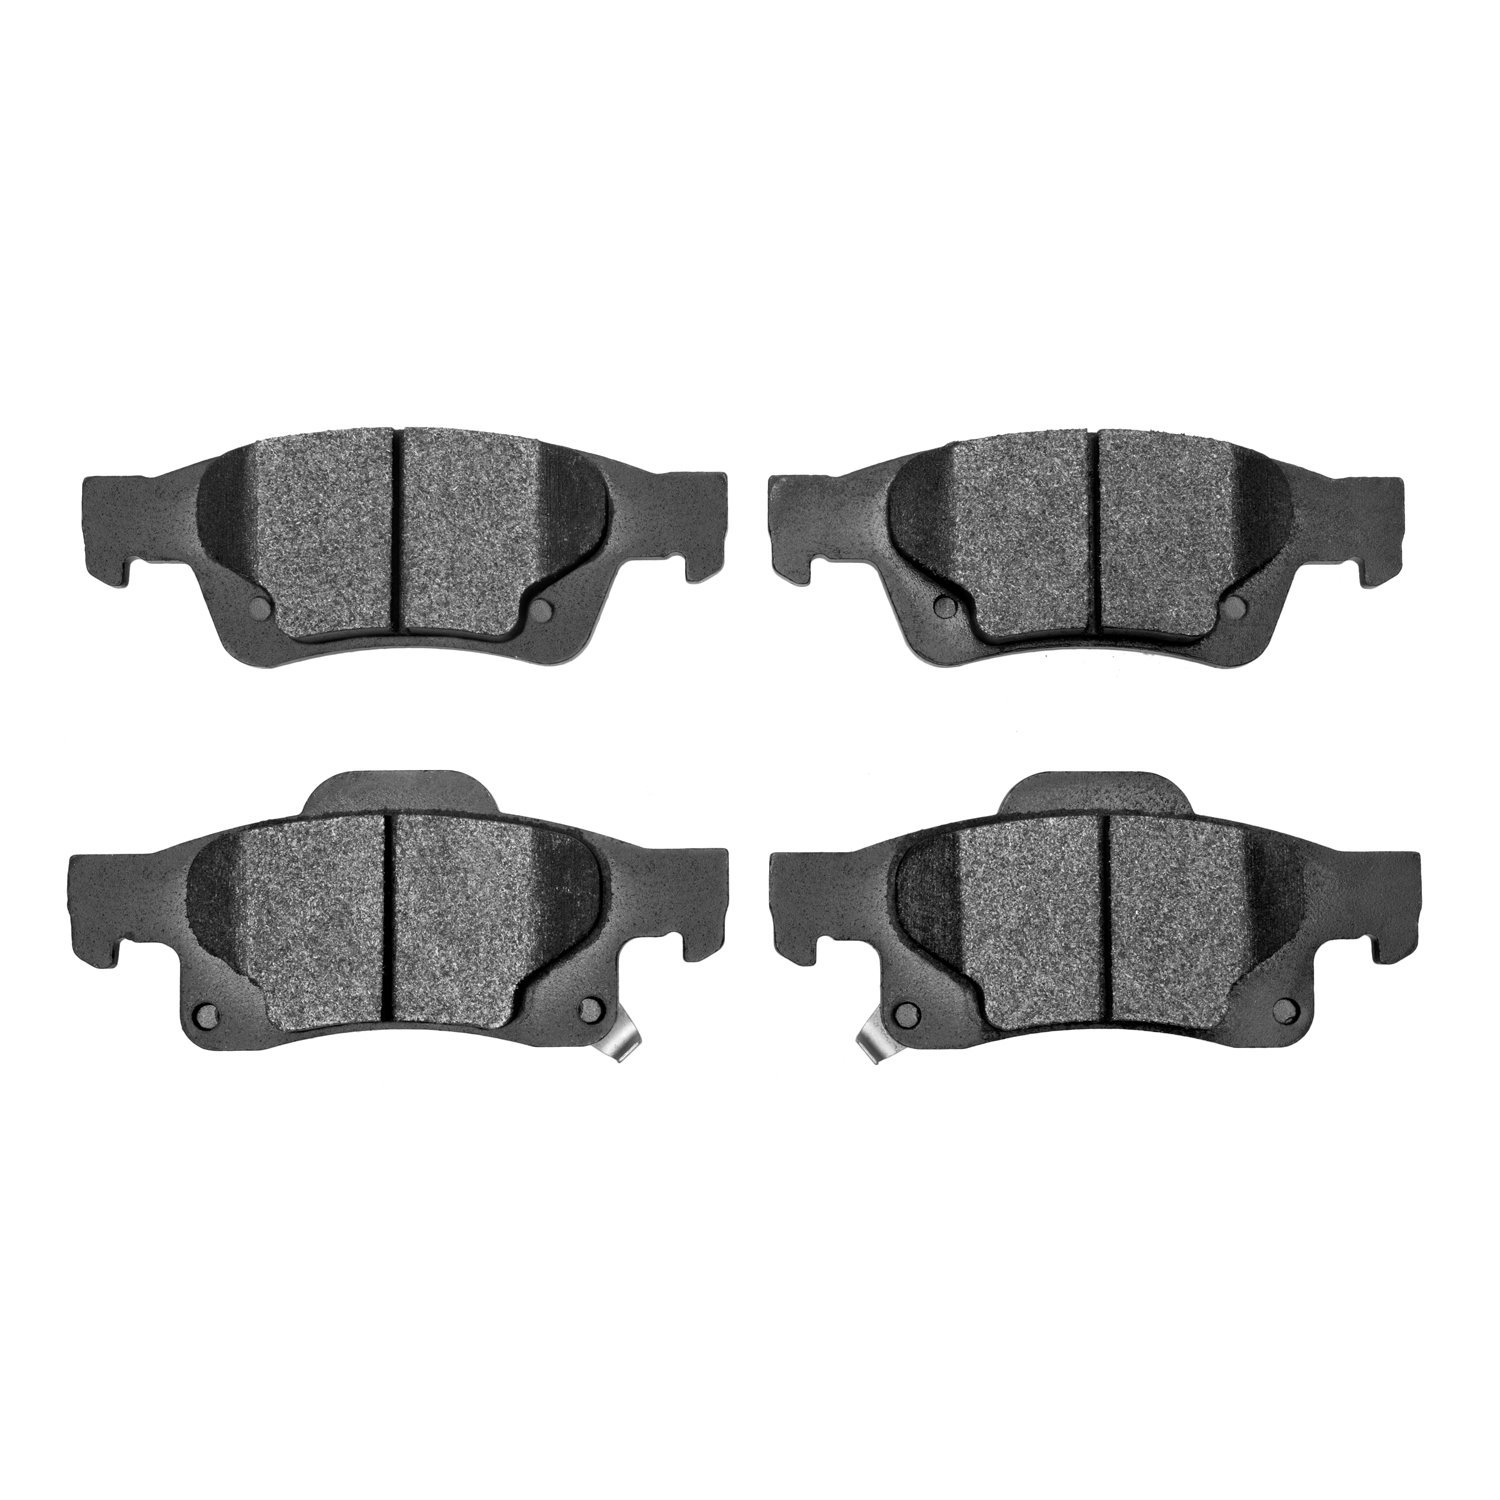 1400-1498-00 Ultimate-Duty Brake Pads Kit, Fits Select Mopar, Position: Rear